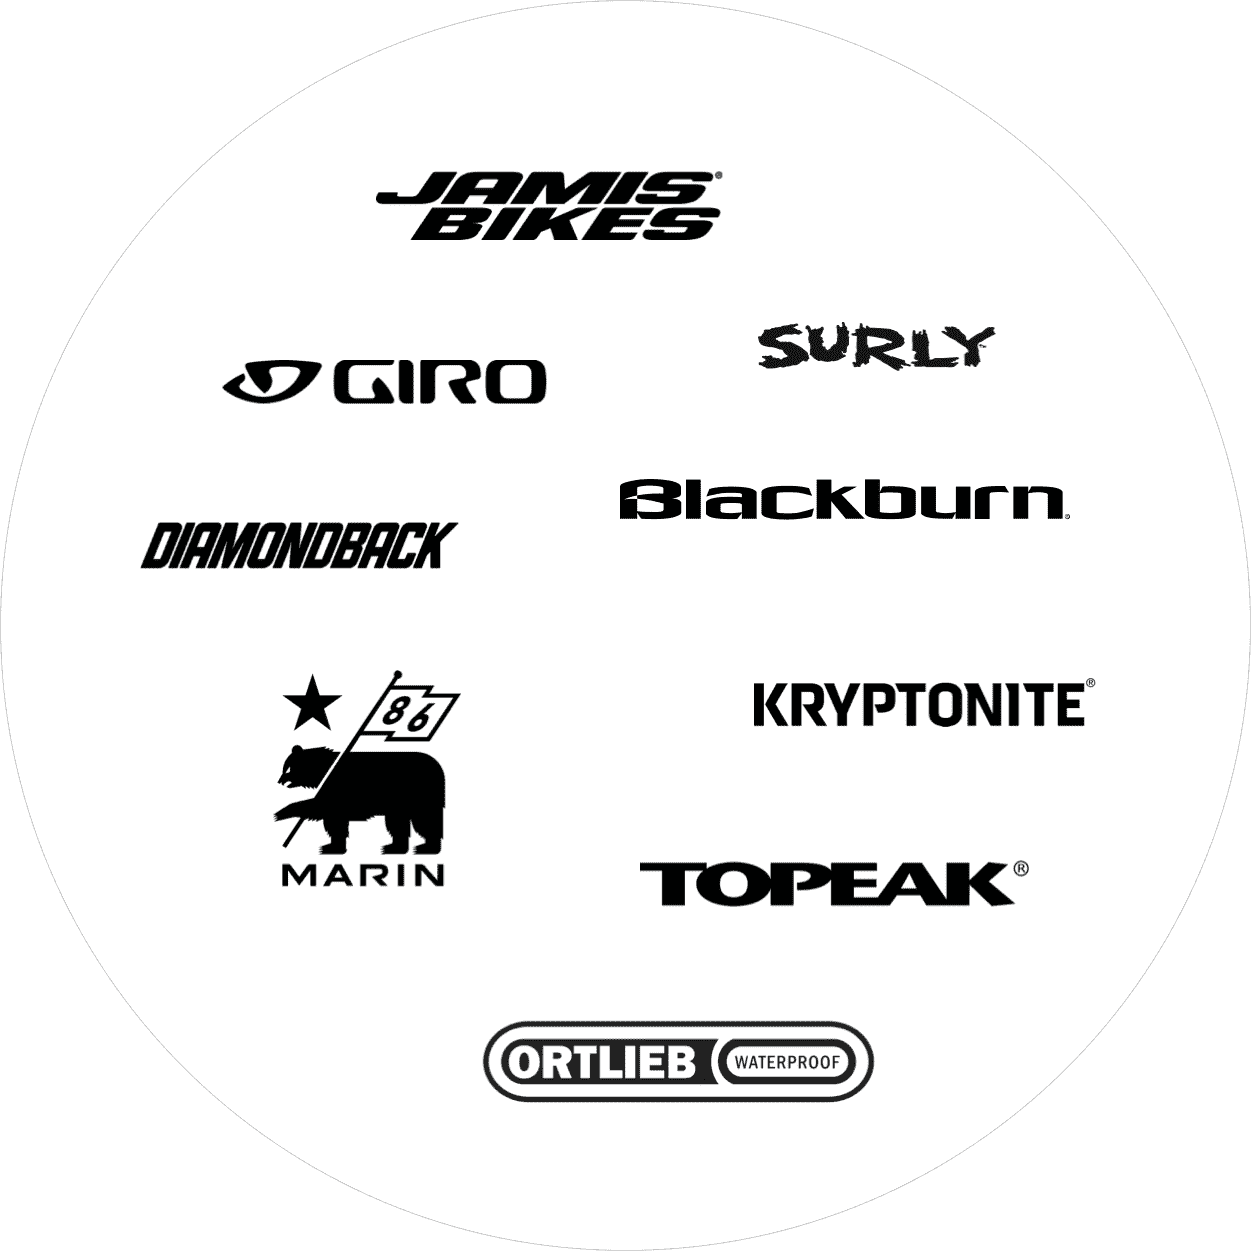 a collage of Marin, Jamis, Surly, All City, Diamondback, Kryptonite, Giro, Blackburn, Ortlieb, and Topeak brand logos